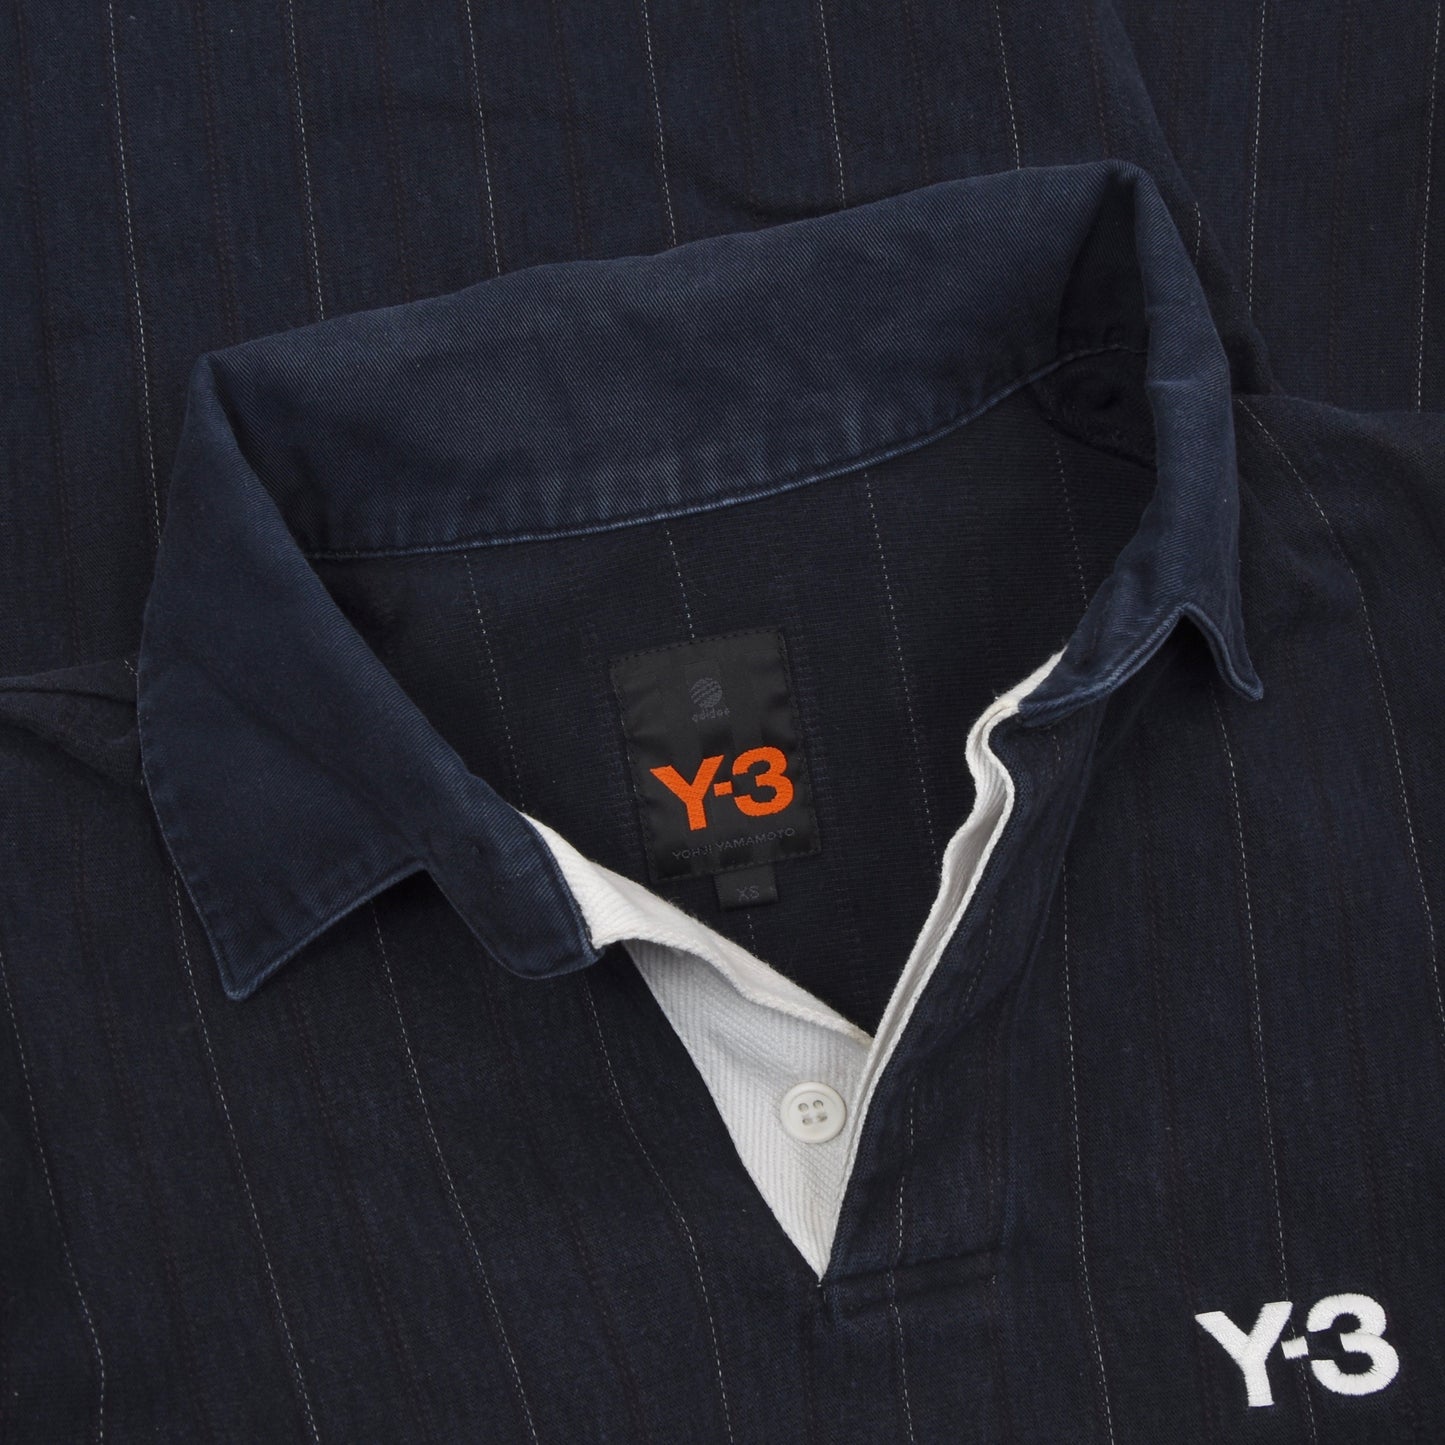 Y3 Yohji Yamamoto Rugby Shirt Size XS